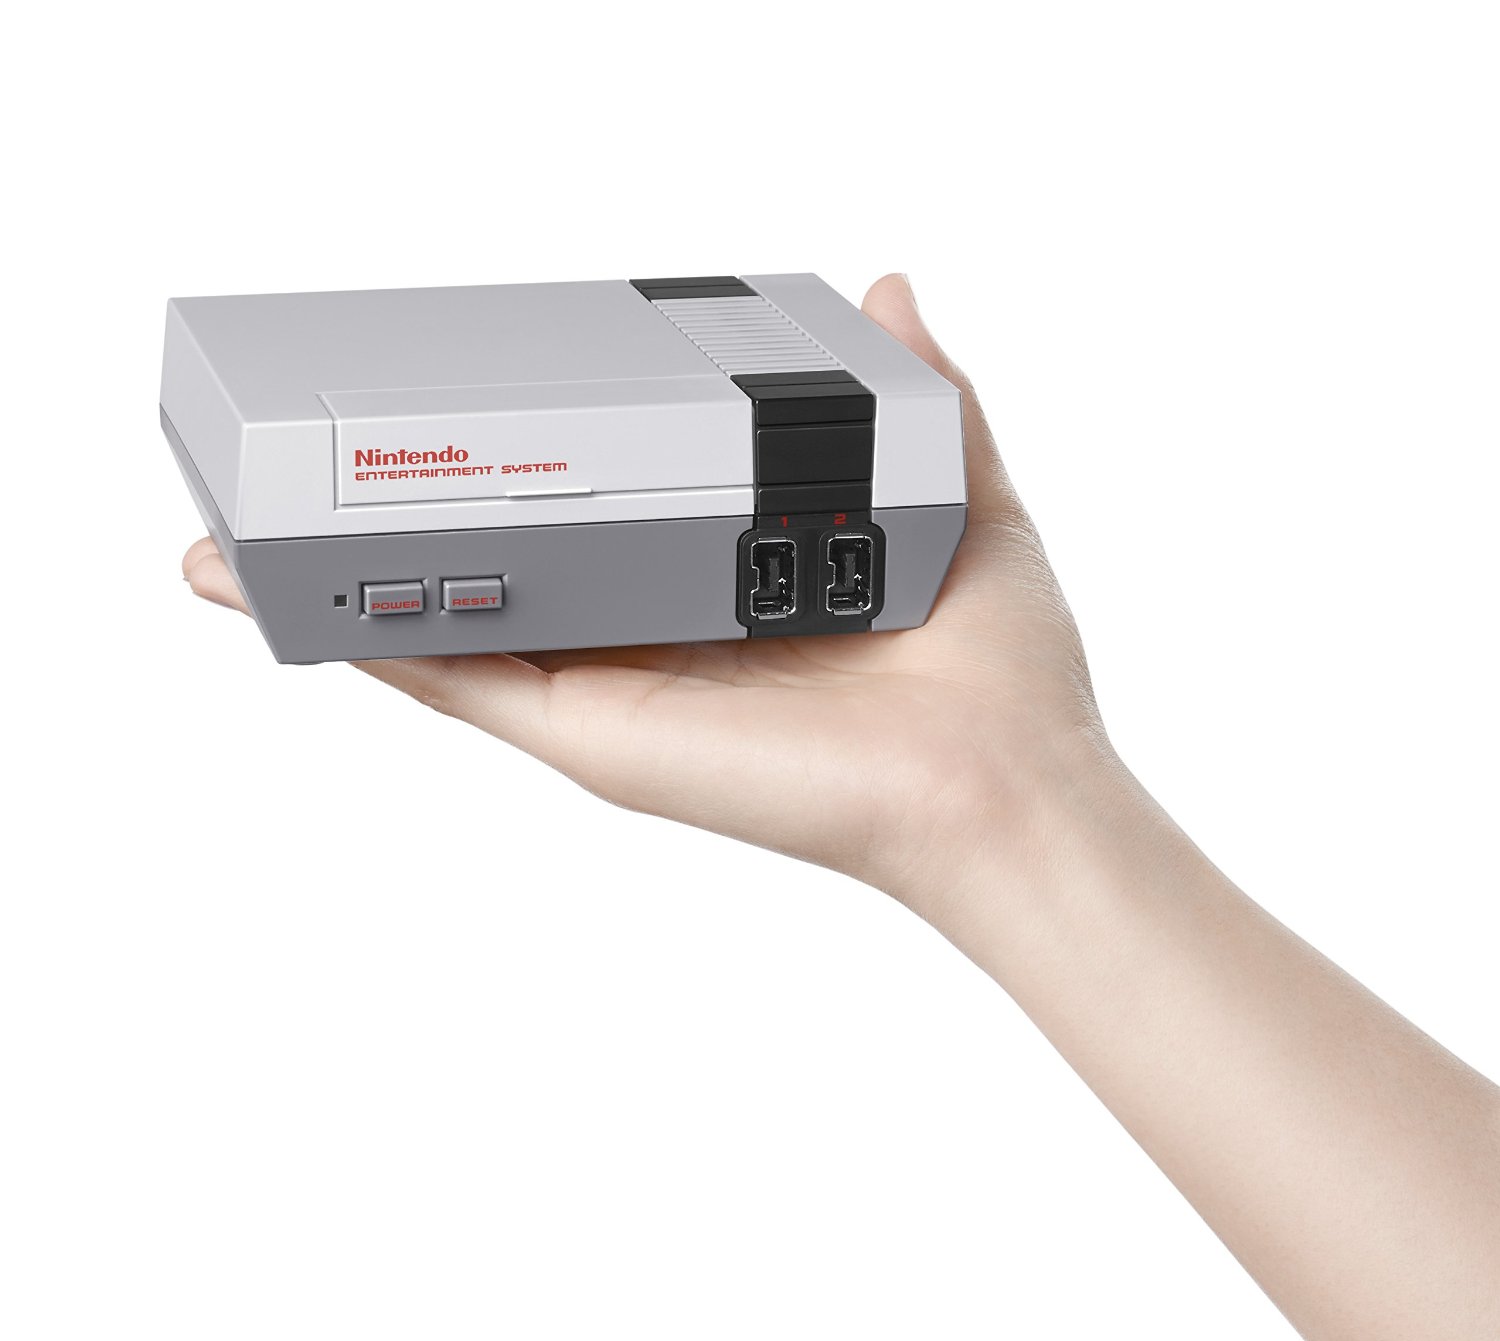 schweizisk dæmning Konkurrere Nintendo NES mini pre-order now. Release date November 11, 2016